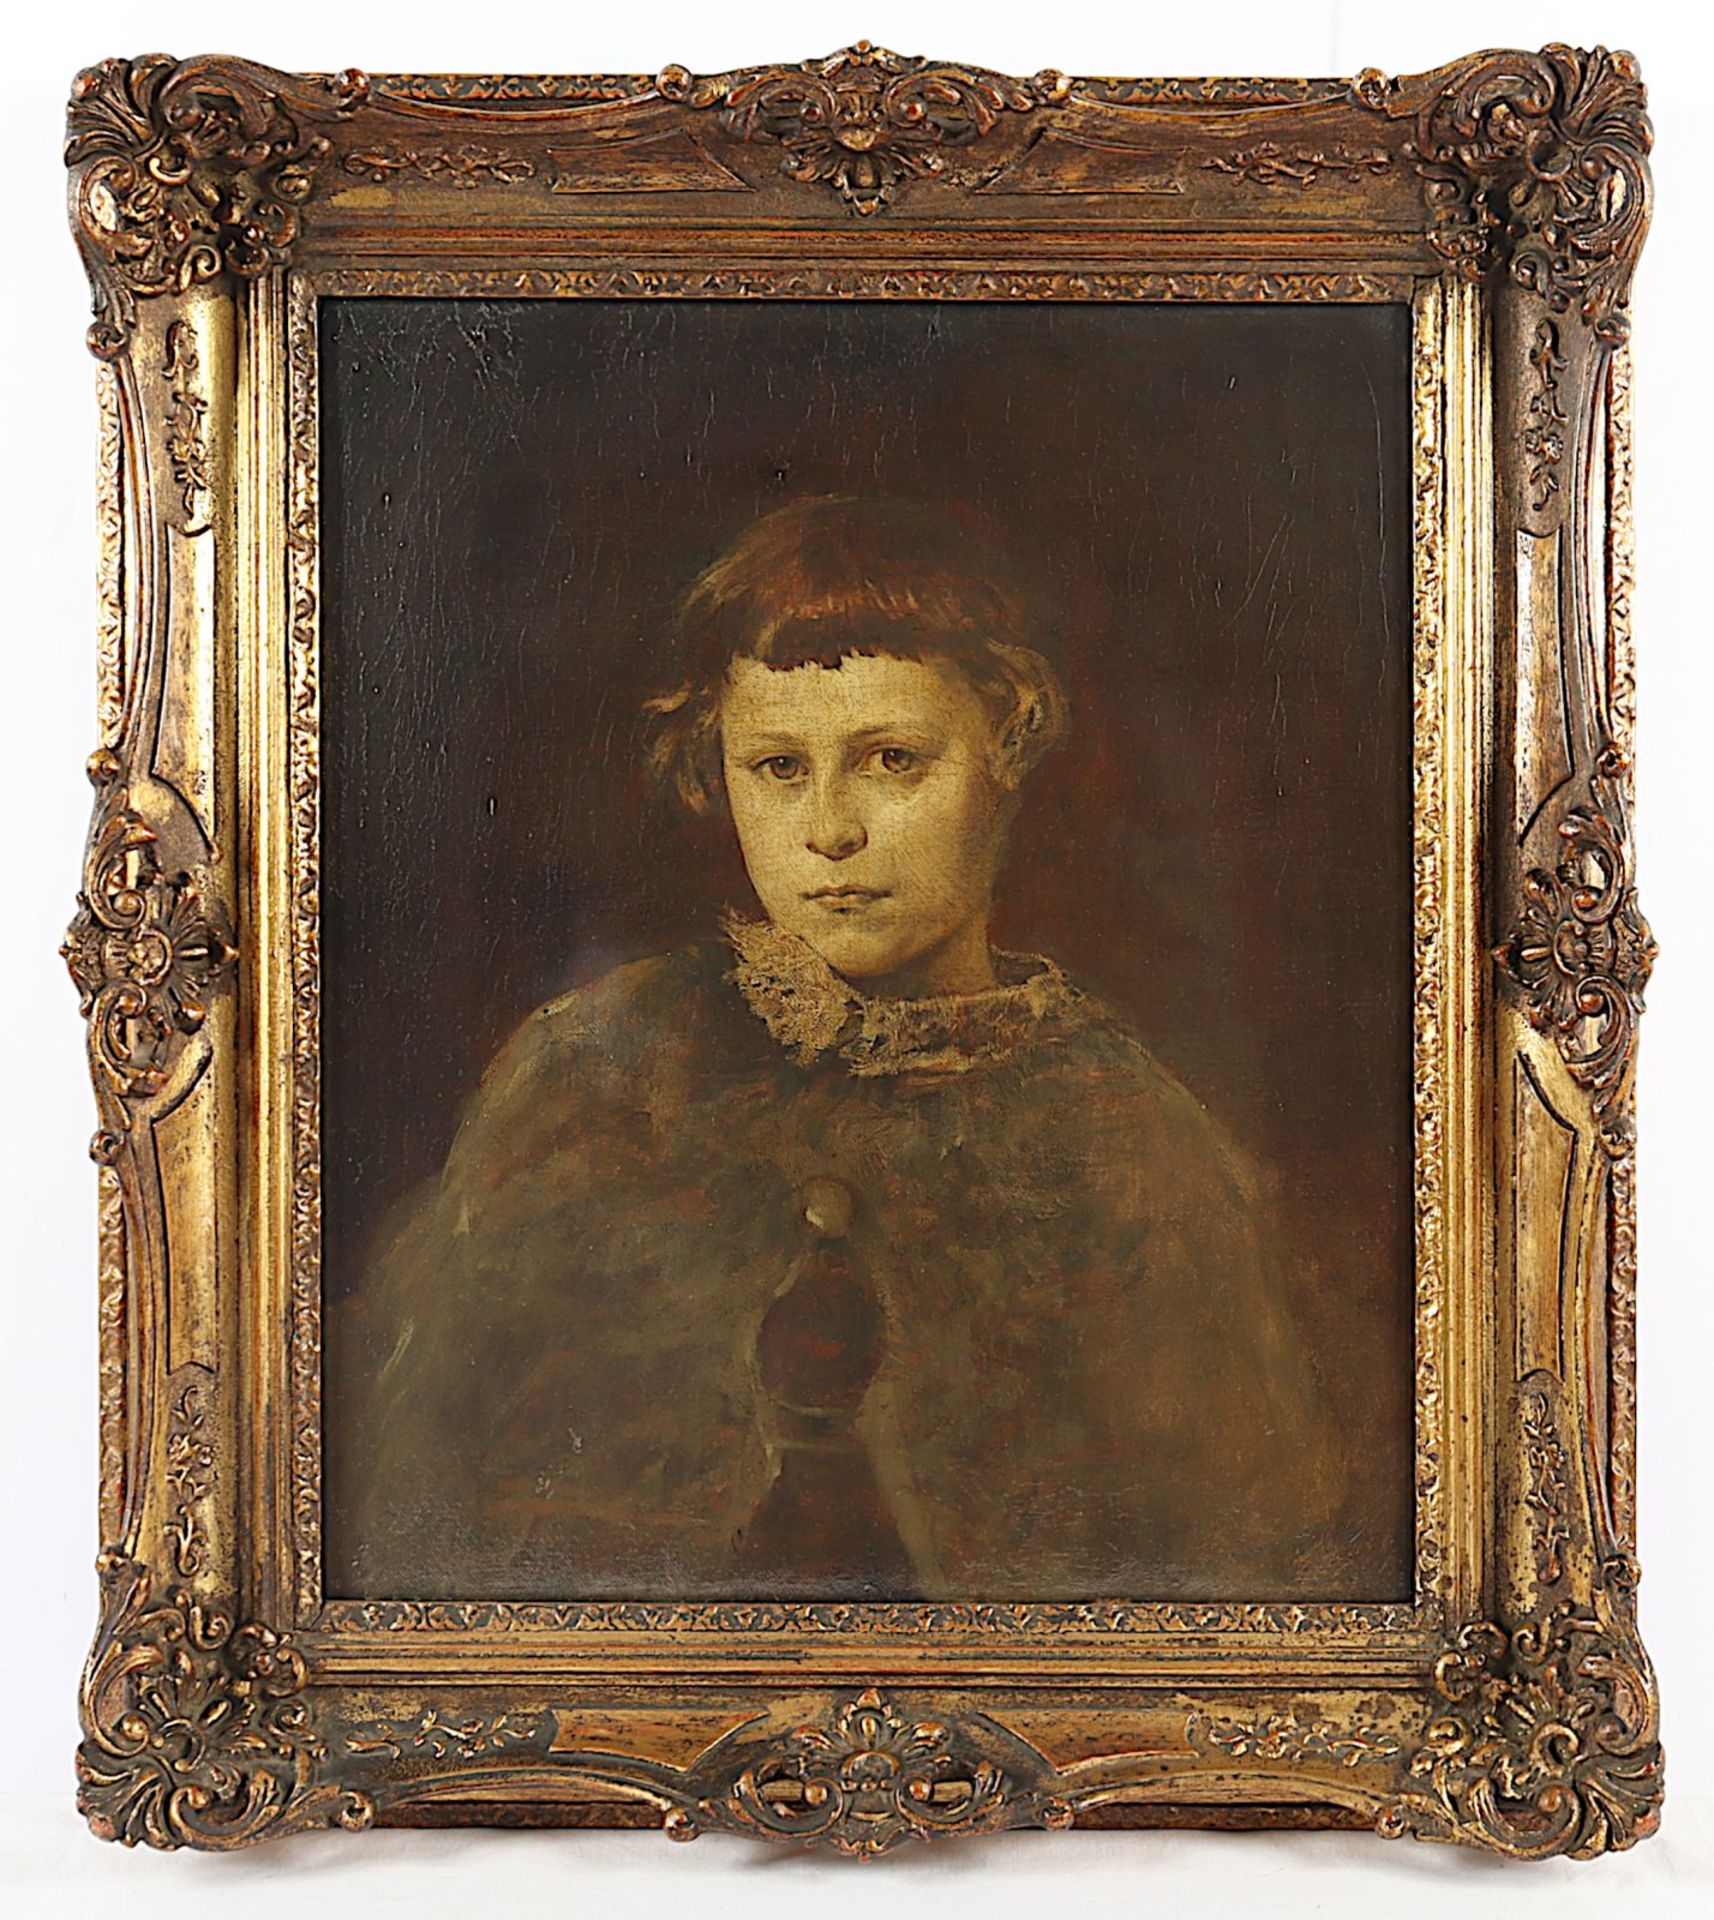 KNAUS, Ludwig (1829-1910), "Portraitstudie", R.